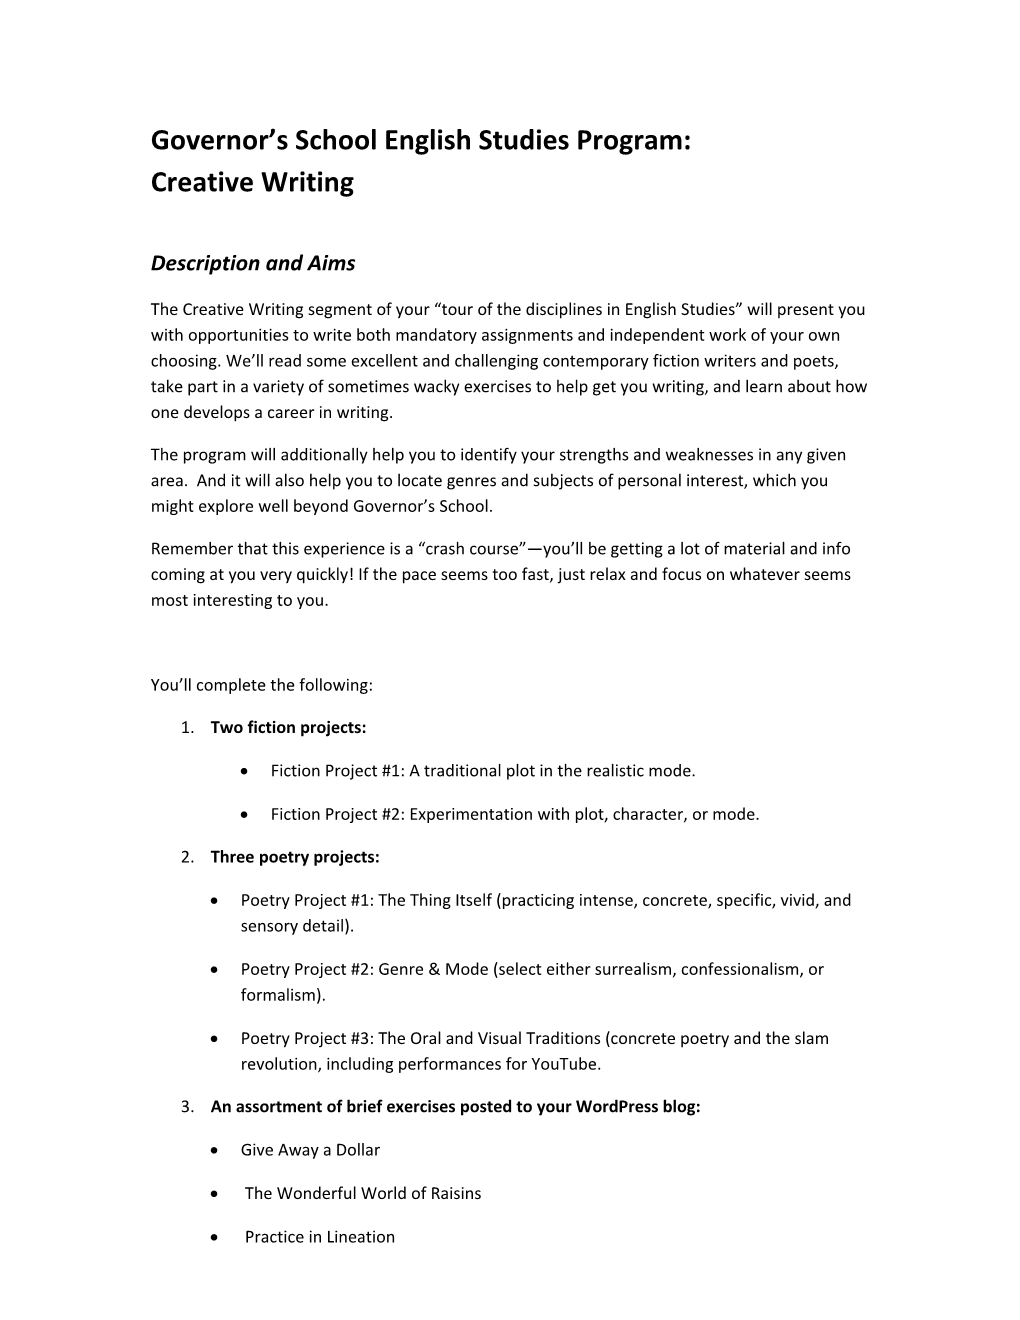 Governor S School English Studies Program: Creative Writing